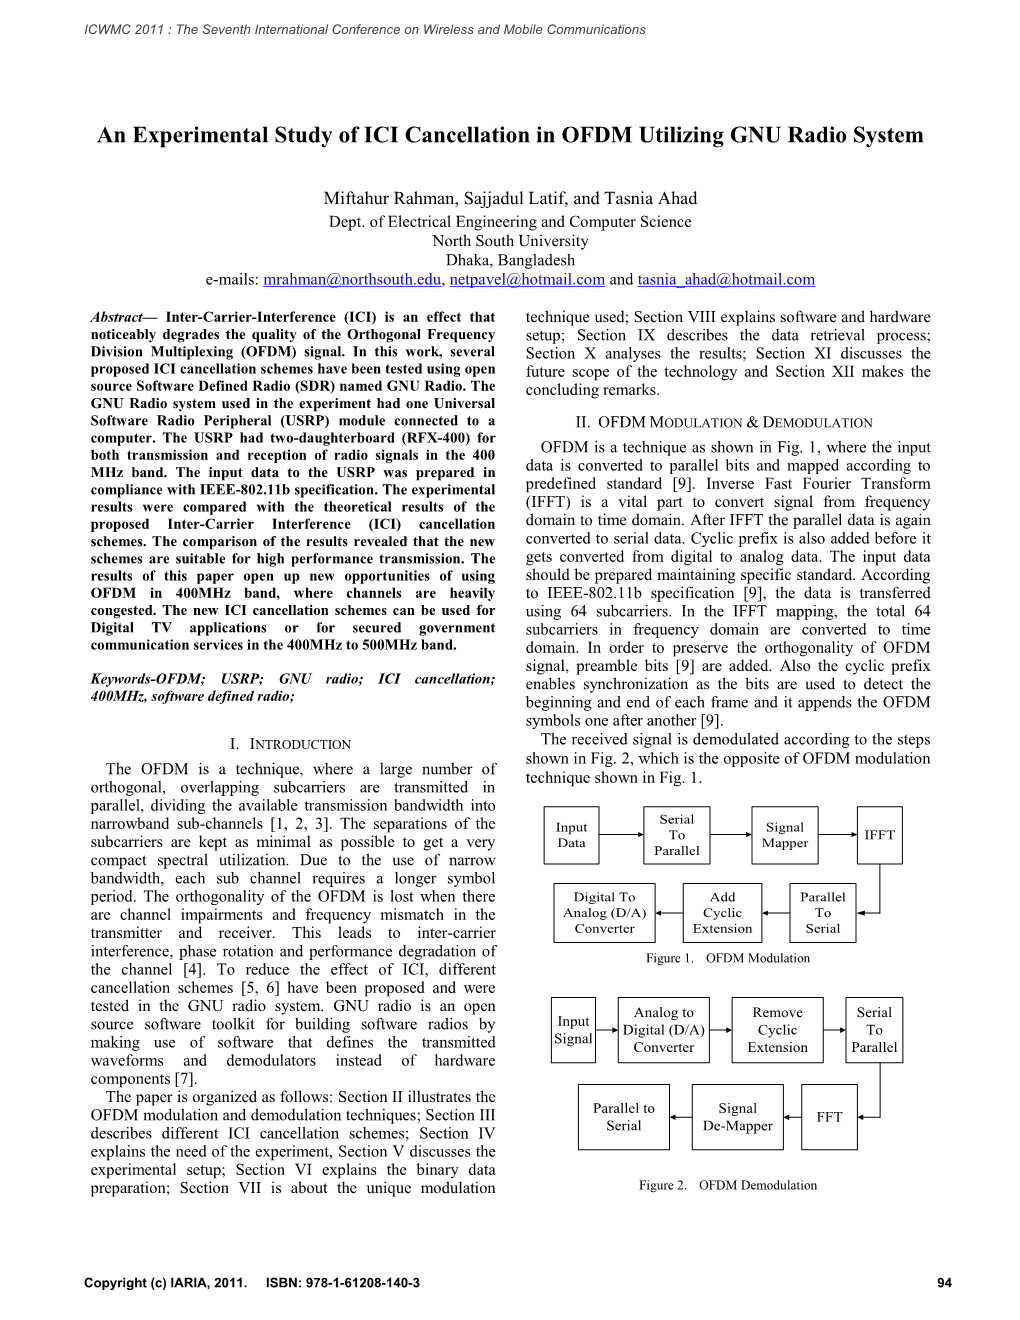 An Experimental Study of ICI Cancellation in OFDM Utilizing GNU Radio System